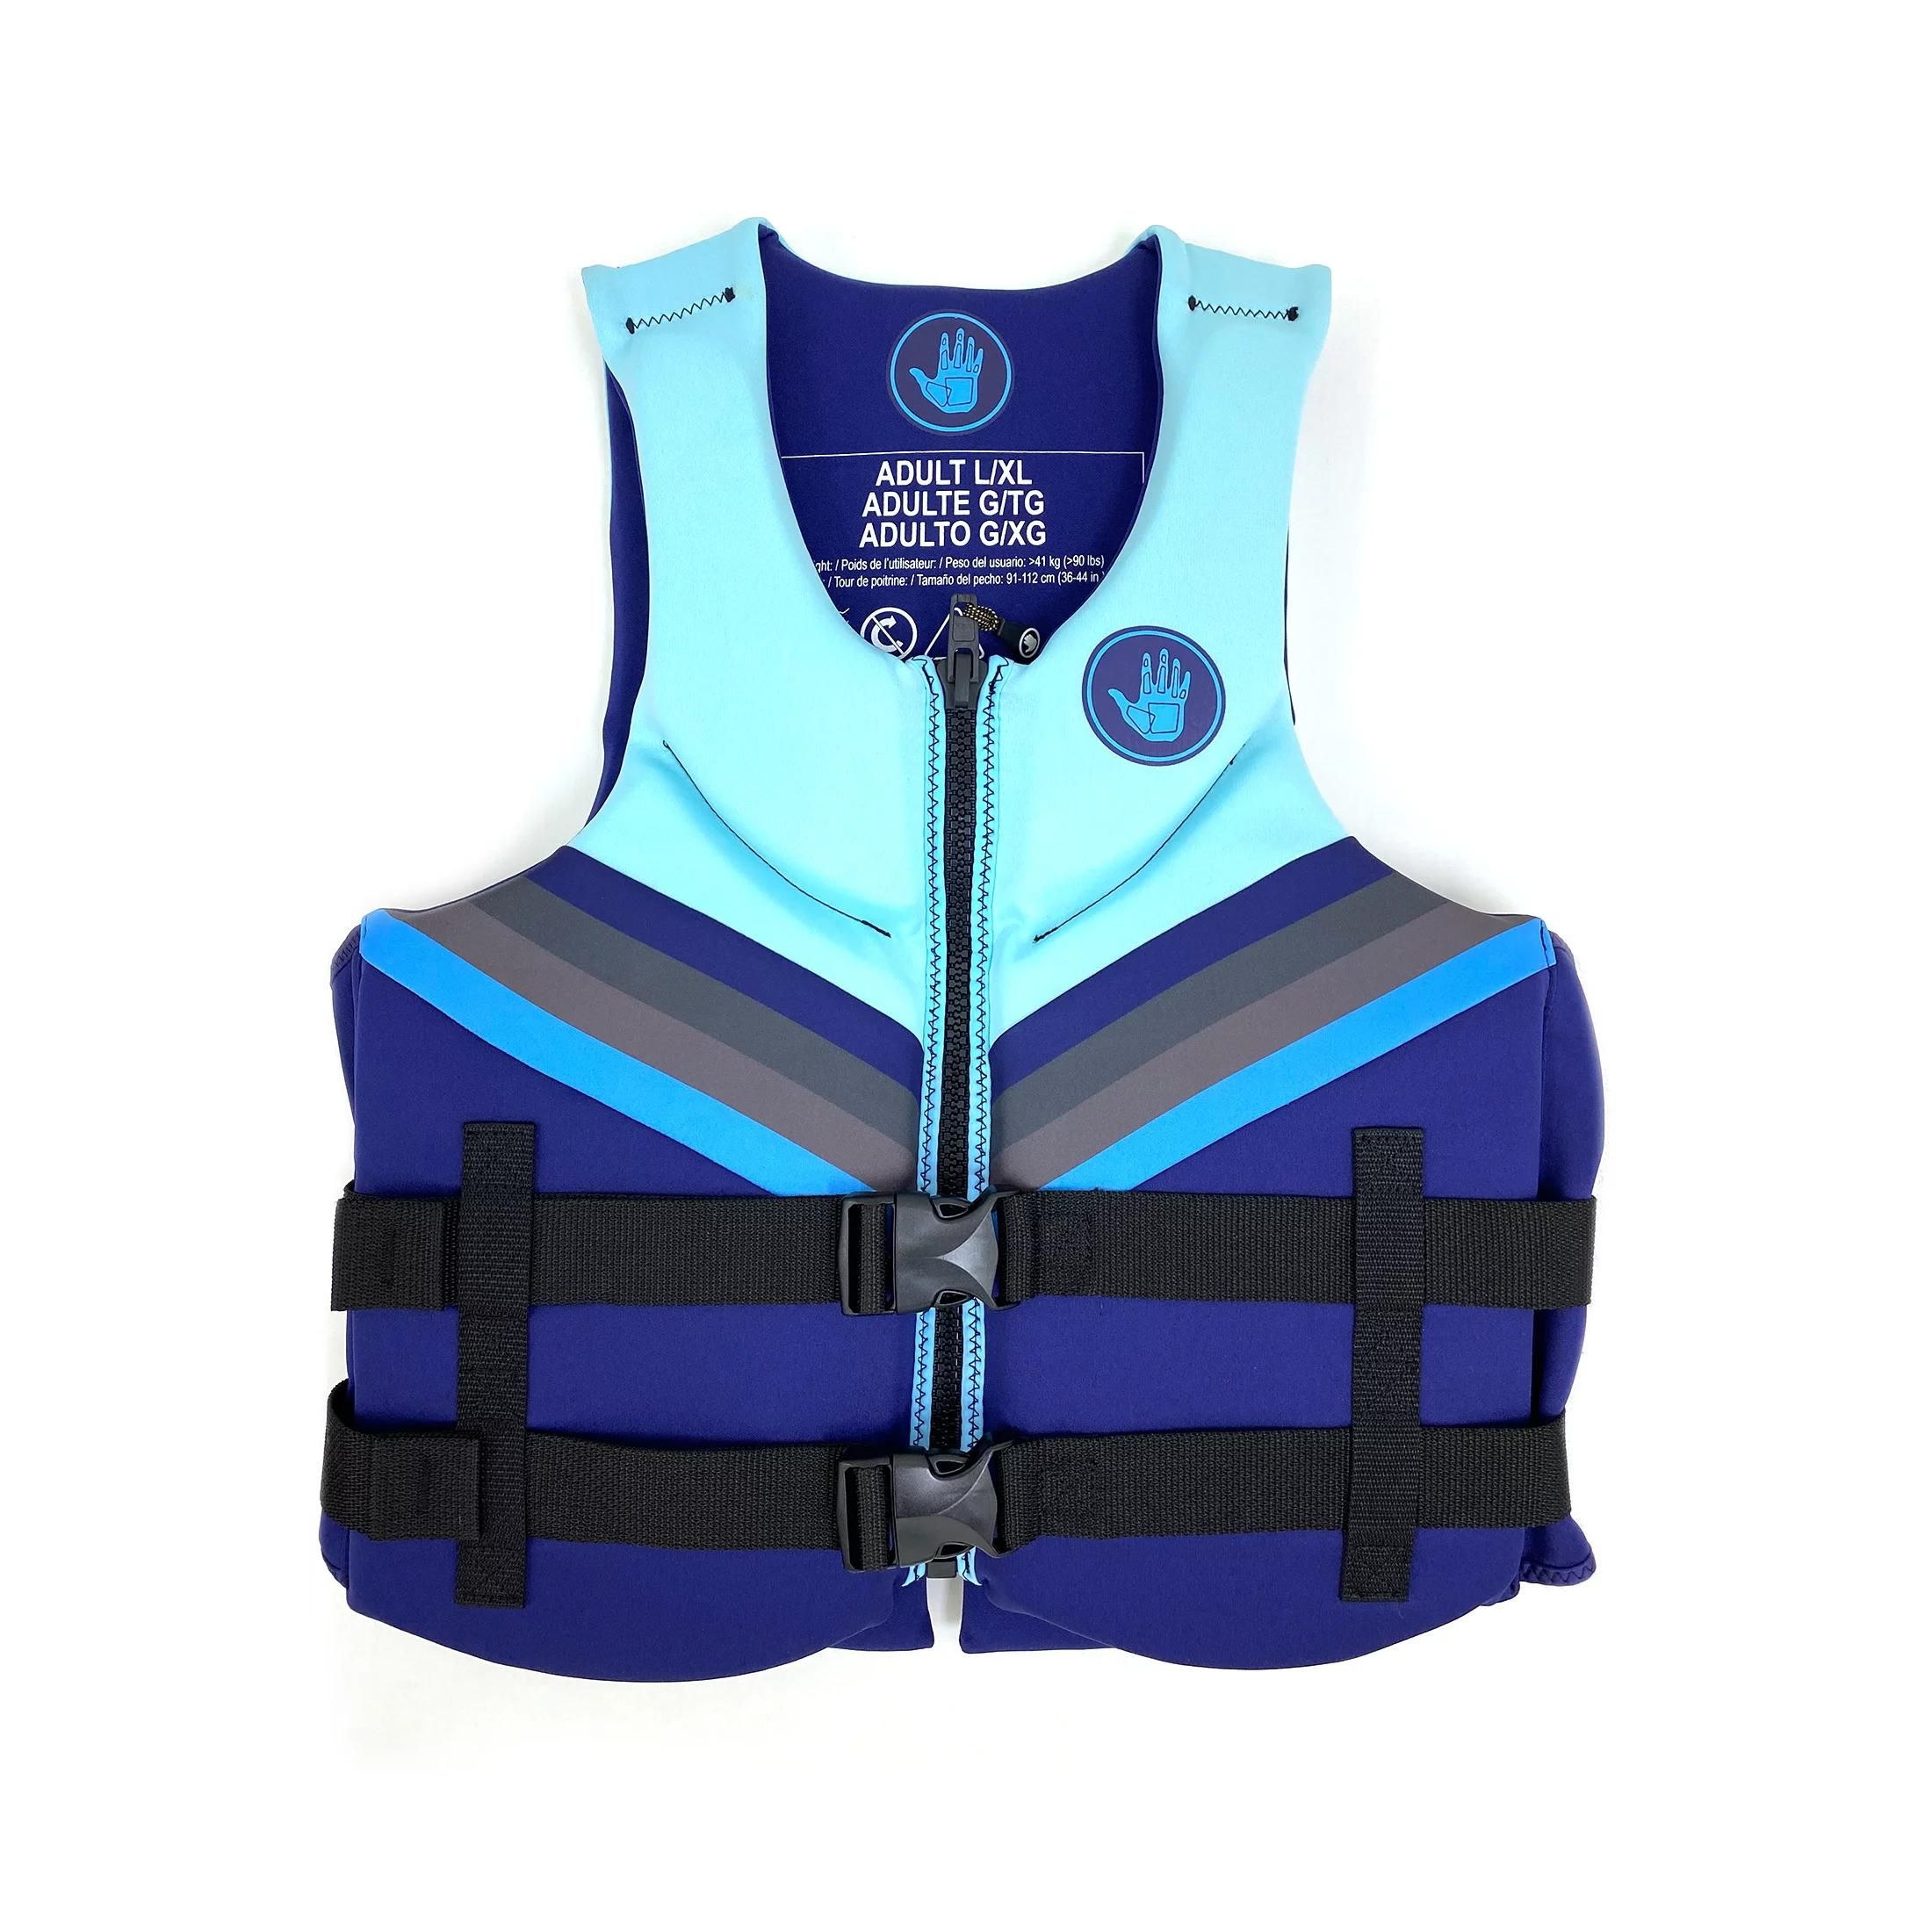 Adult Swimming Life Jacket Safety Buoyancy Aid Sailing Fishing Boating Vest 